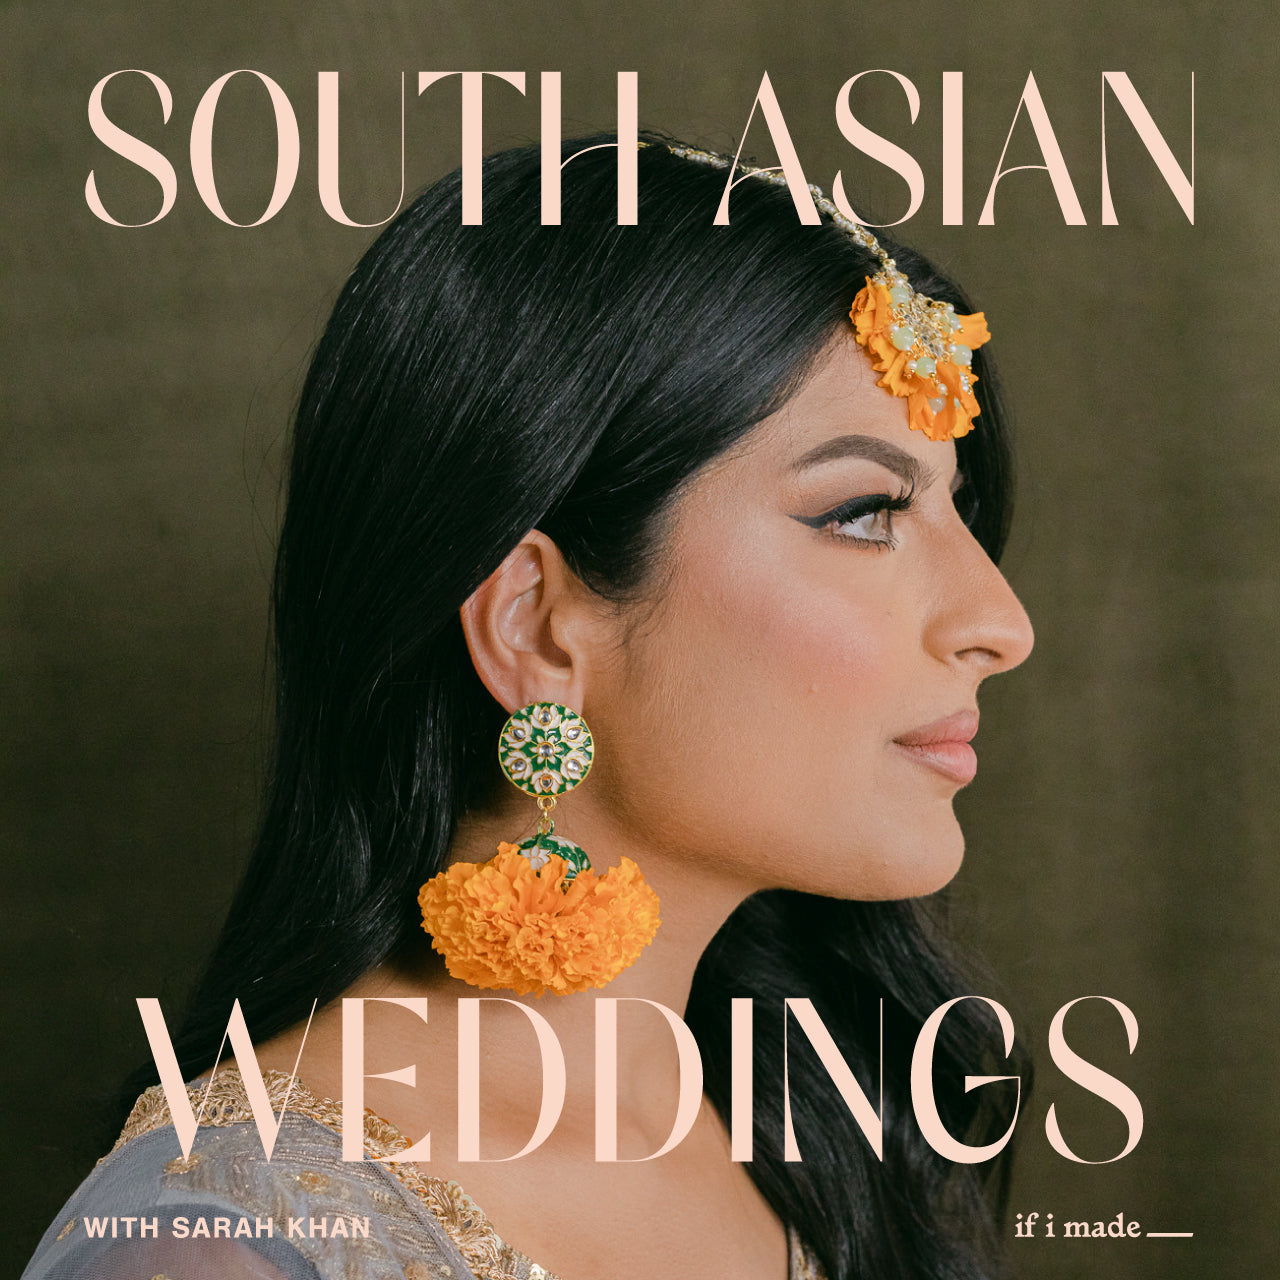 South Asian Weddings with Sarah Khan (ESPP0822) - 24 payments of $69